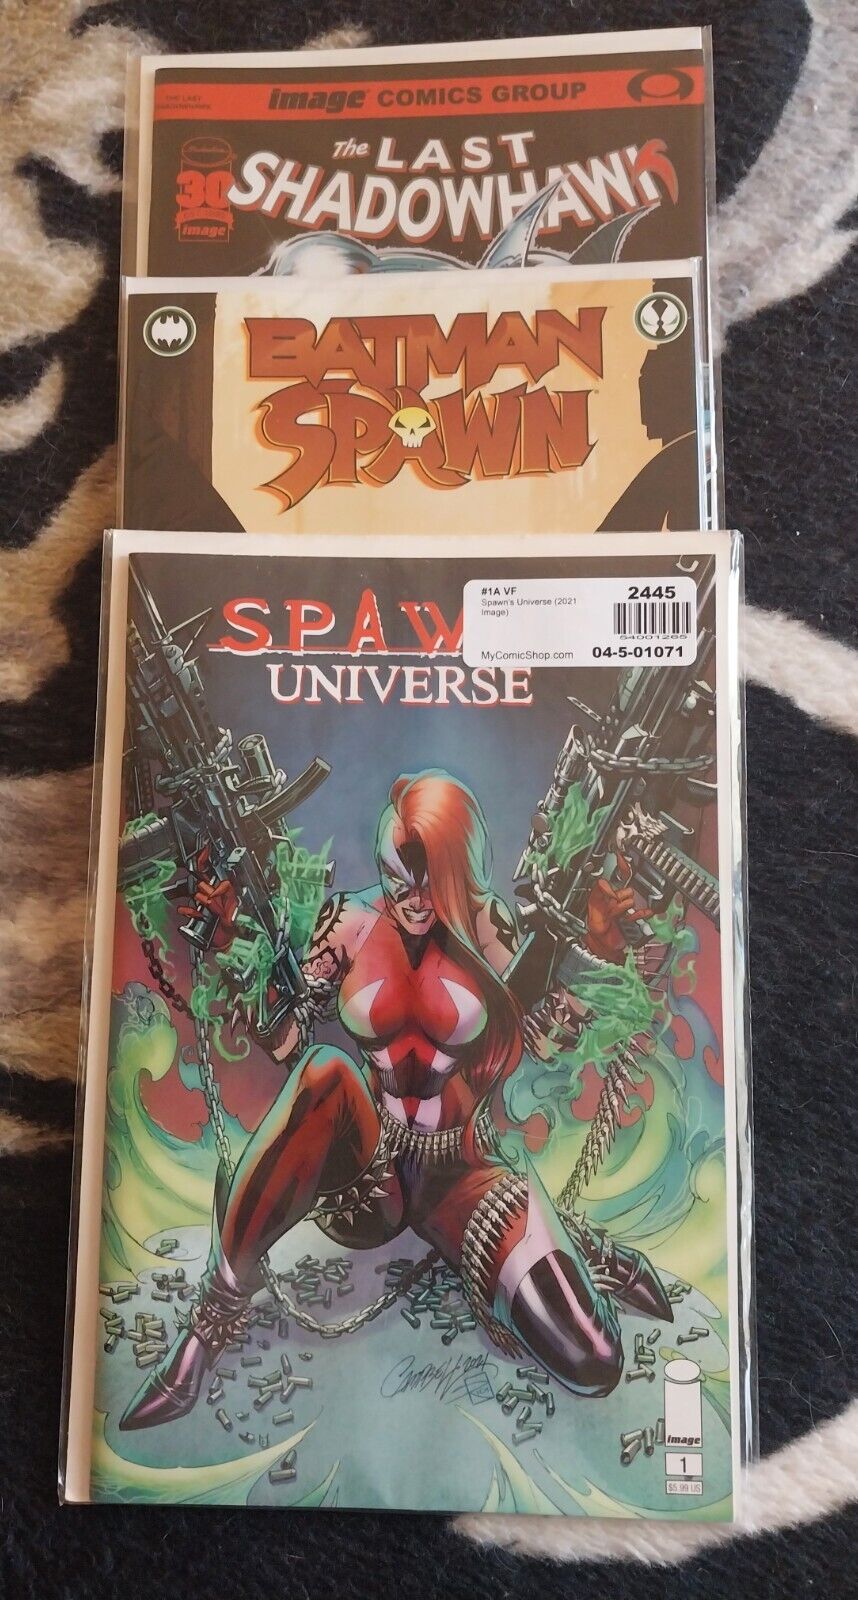 lot of 3 Image comics-Spawn\'s Universe #1-BATMAN SPAWN #1-The Last Shadowhawk #1